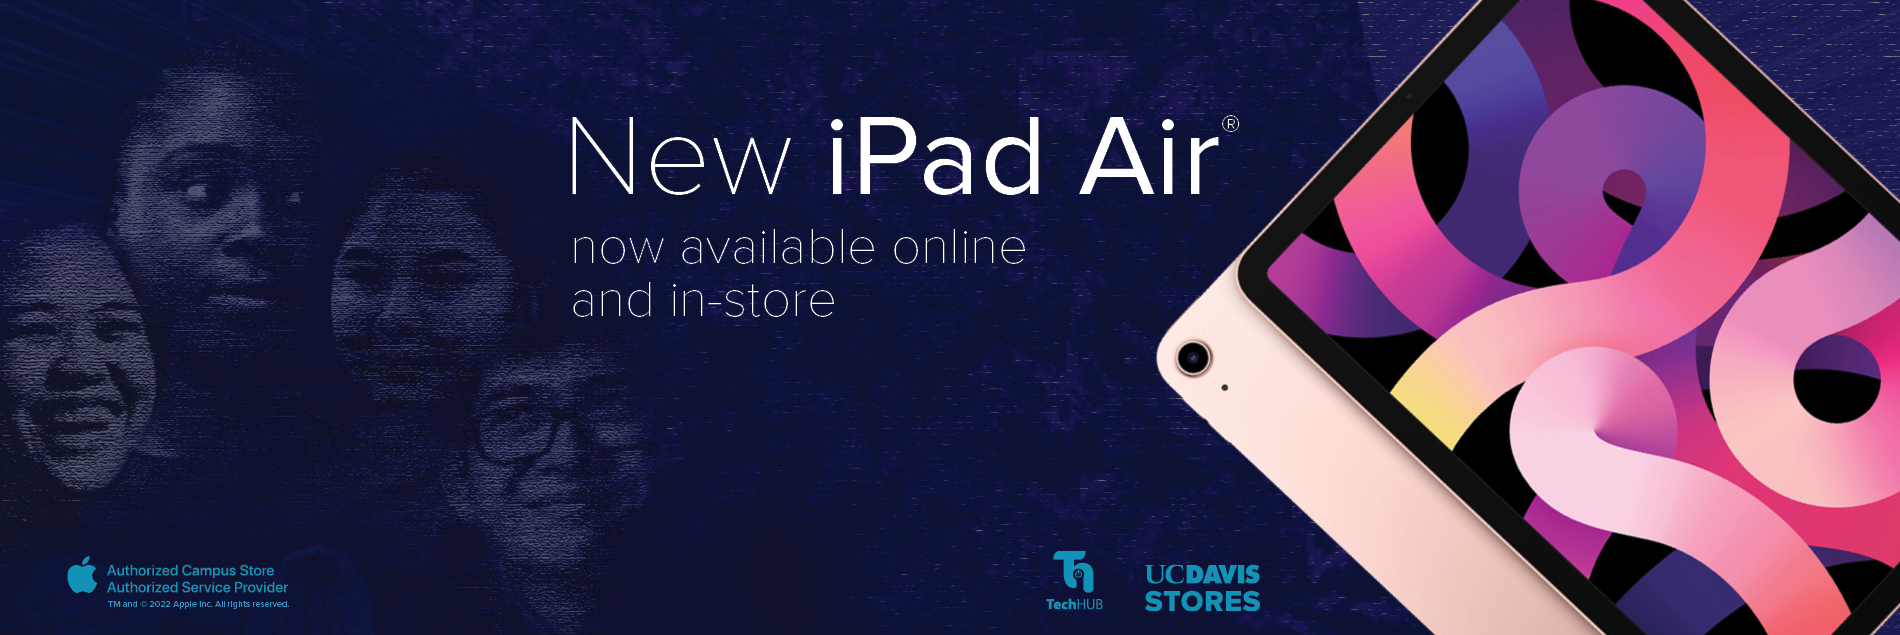 Apple iPad Air Promo